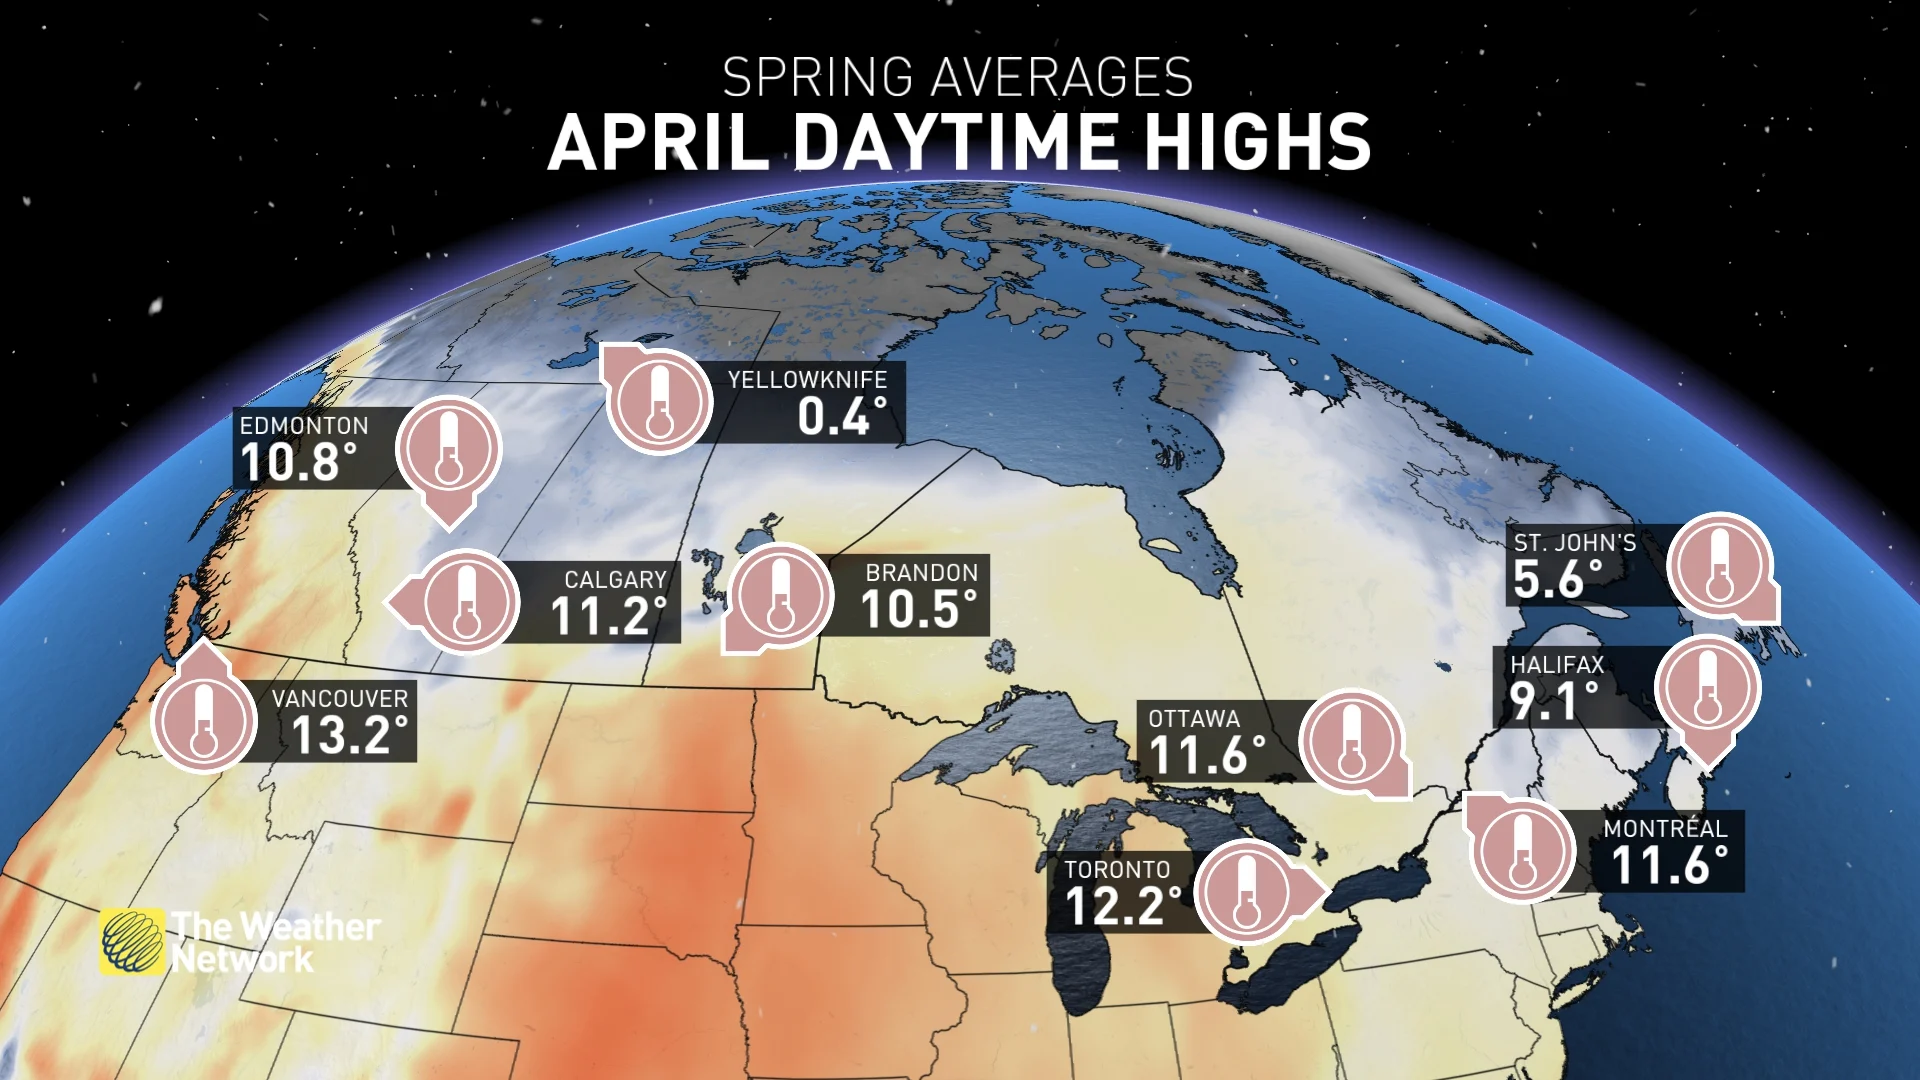 Spring Forecast/Explainer: April daytime highs averages across Canada